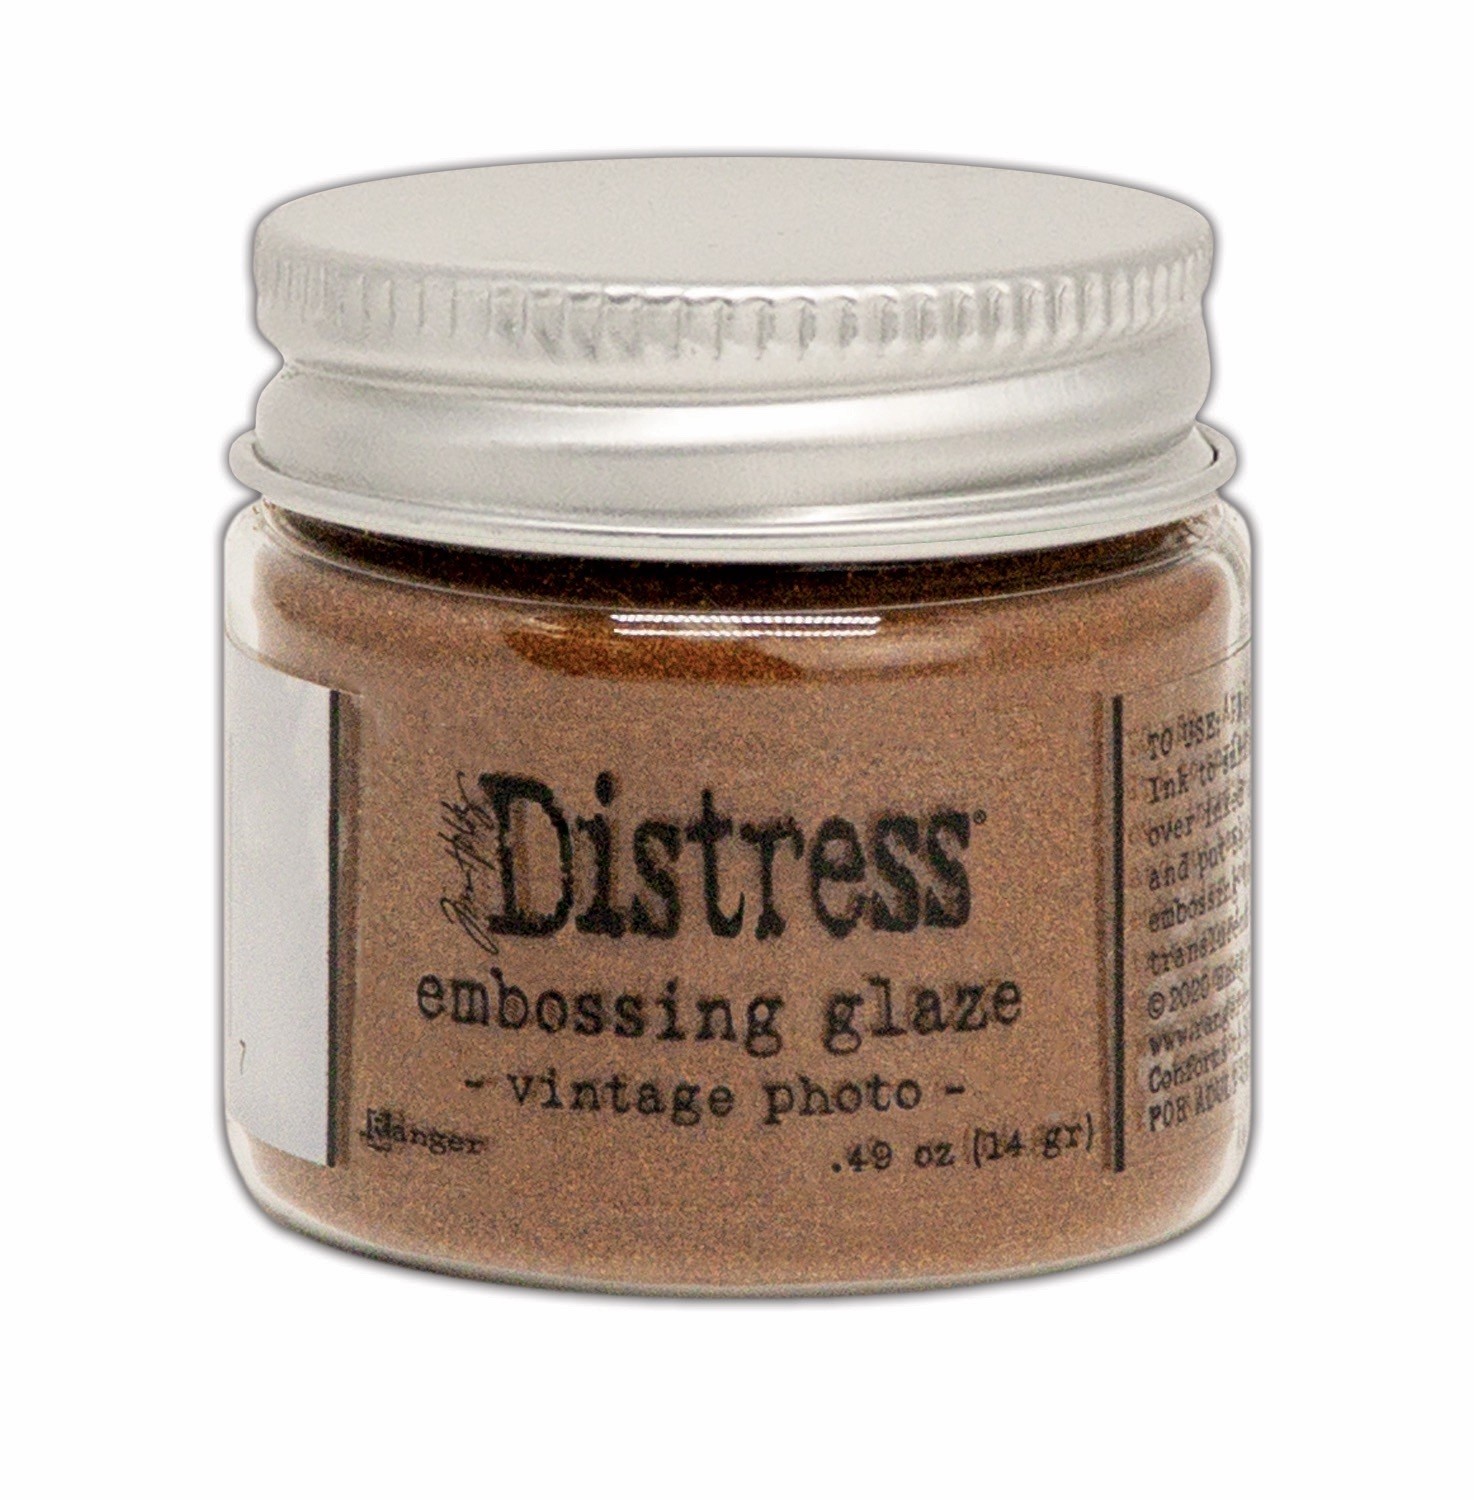 Vintage Photo Distress Embossing Glaze